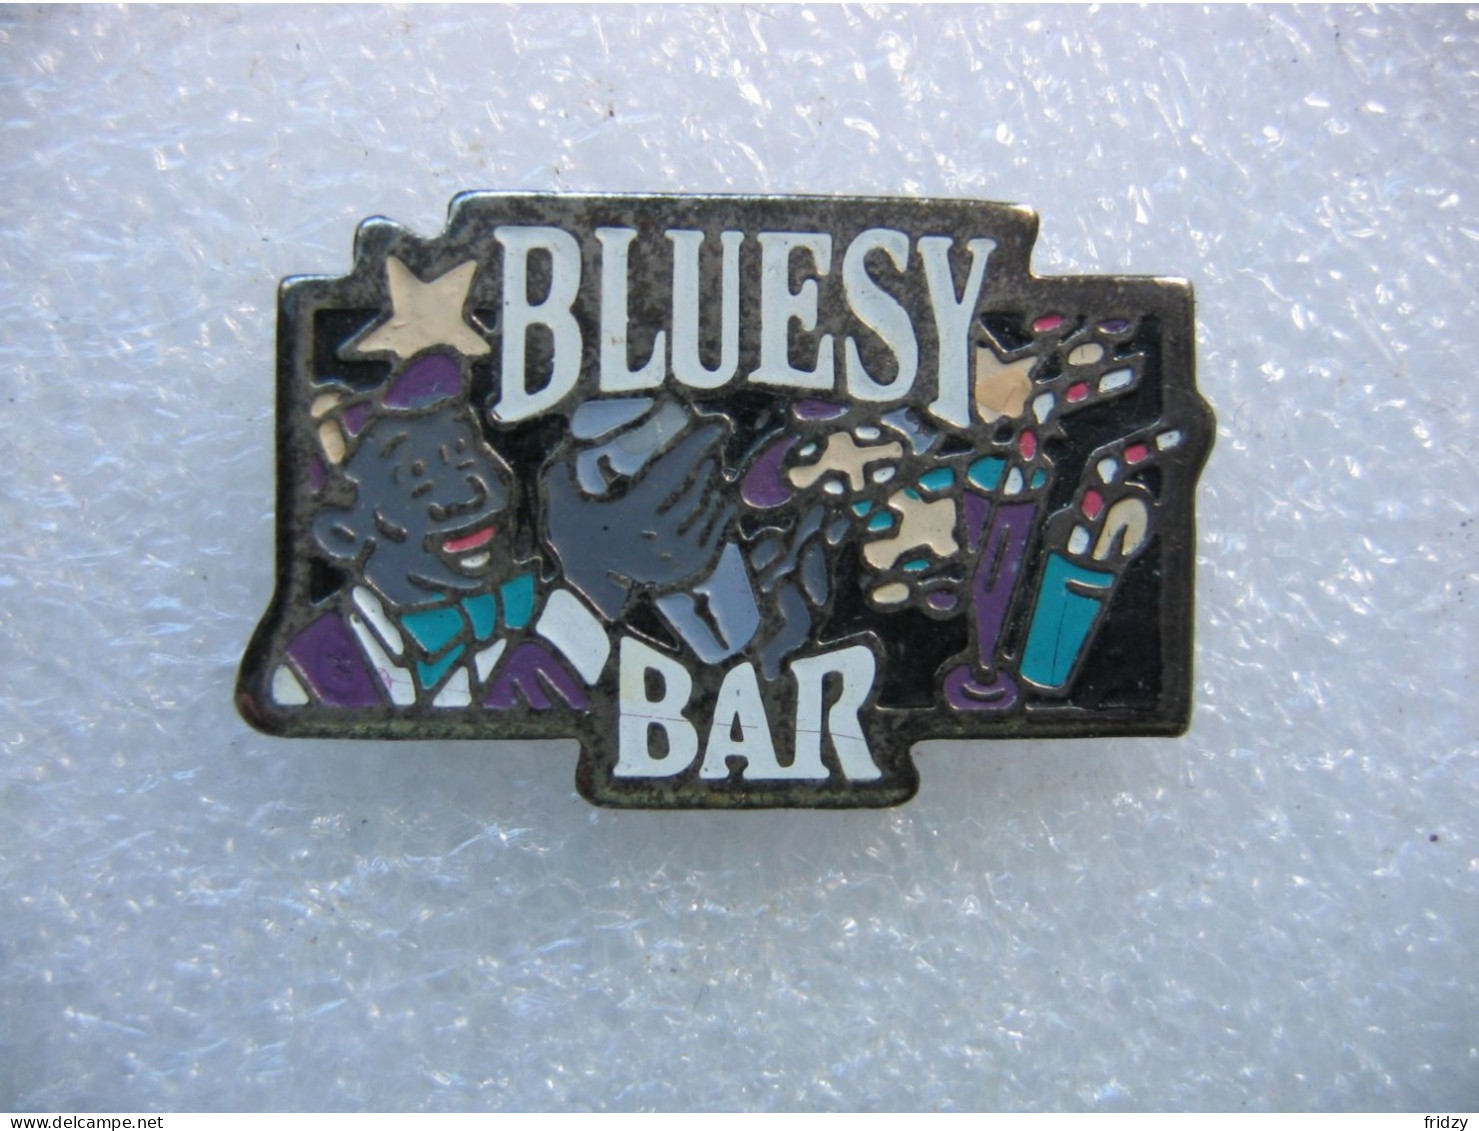 Pin's Bluesy Bar - Boissons